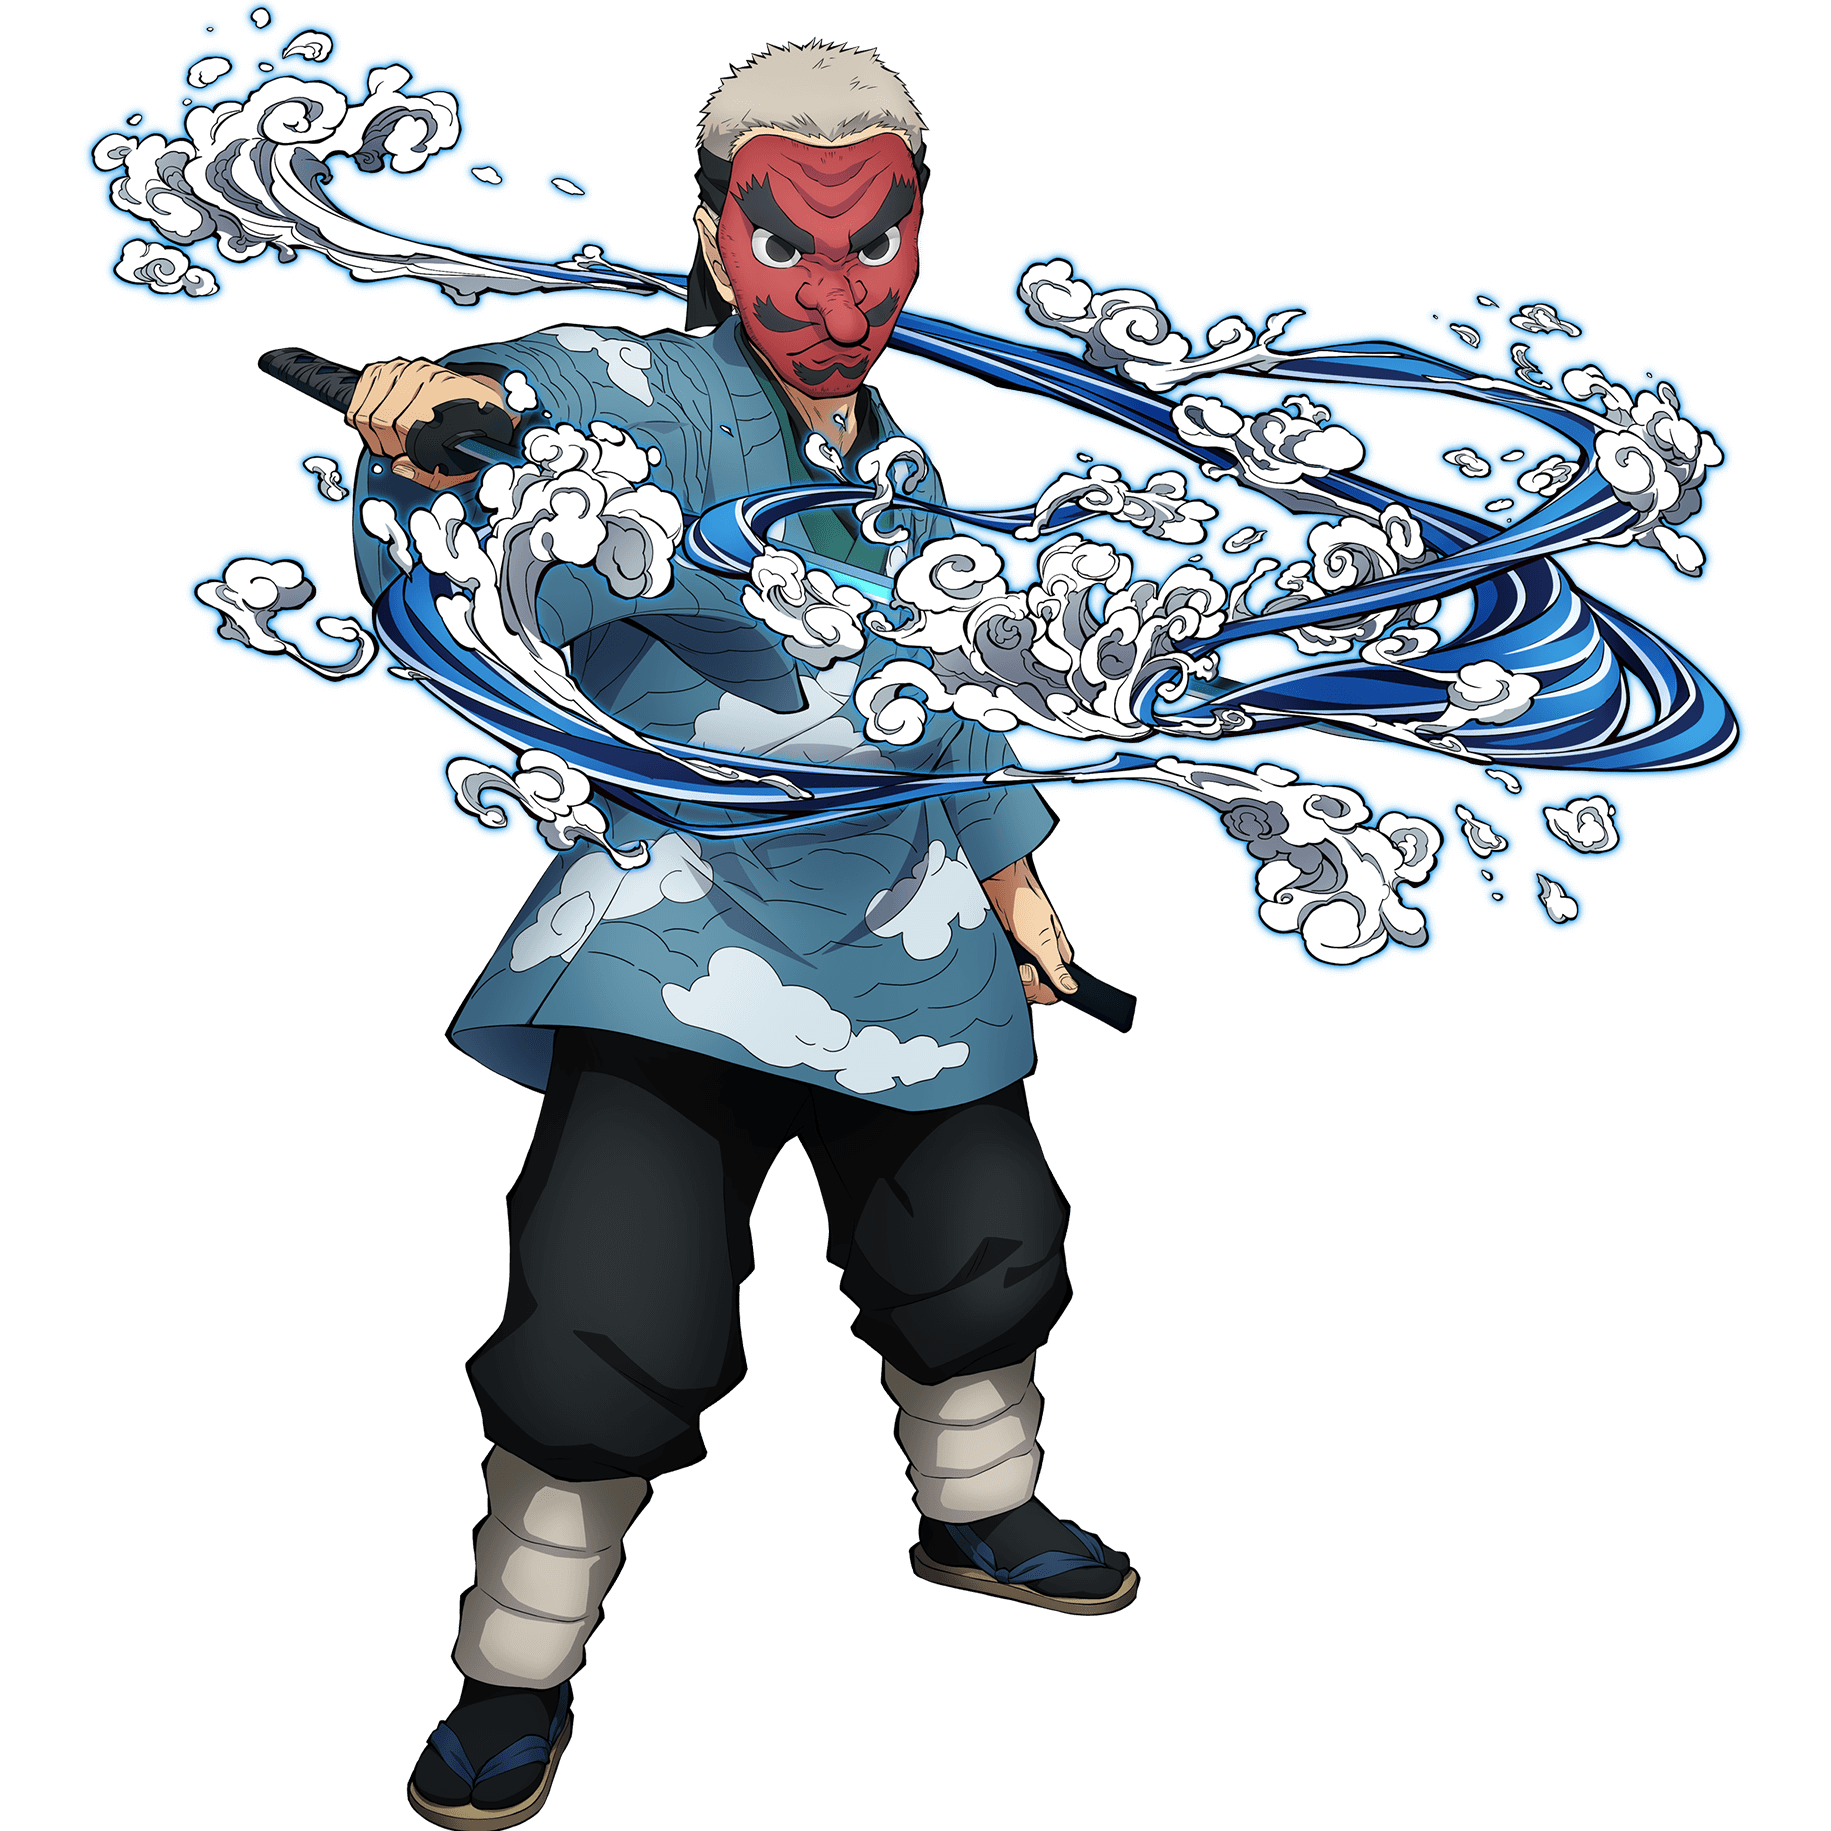 Avatar of Sakonji Urokodaki from Demon Slayer: Kimetsu no Yaiba wielding water-style sword technique.